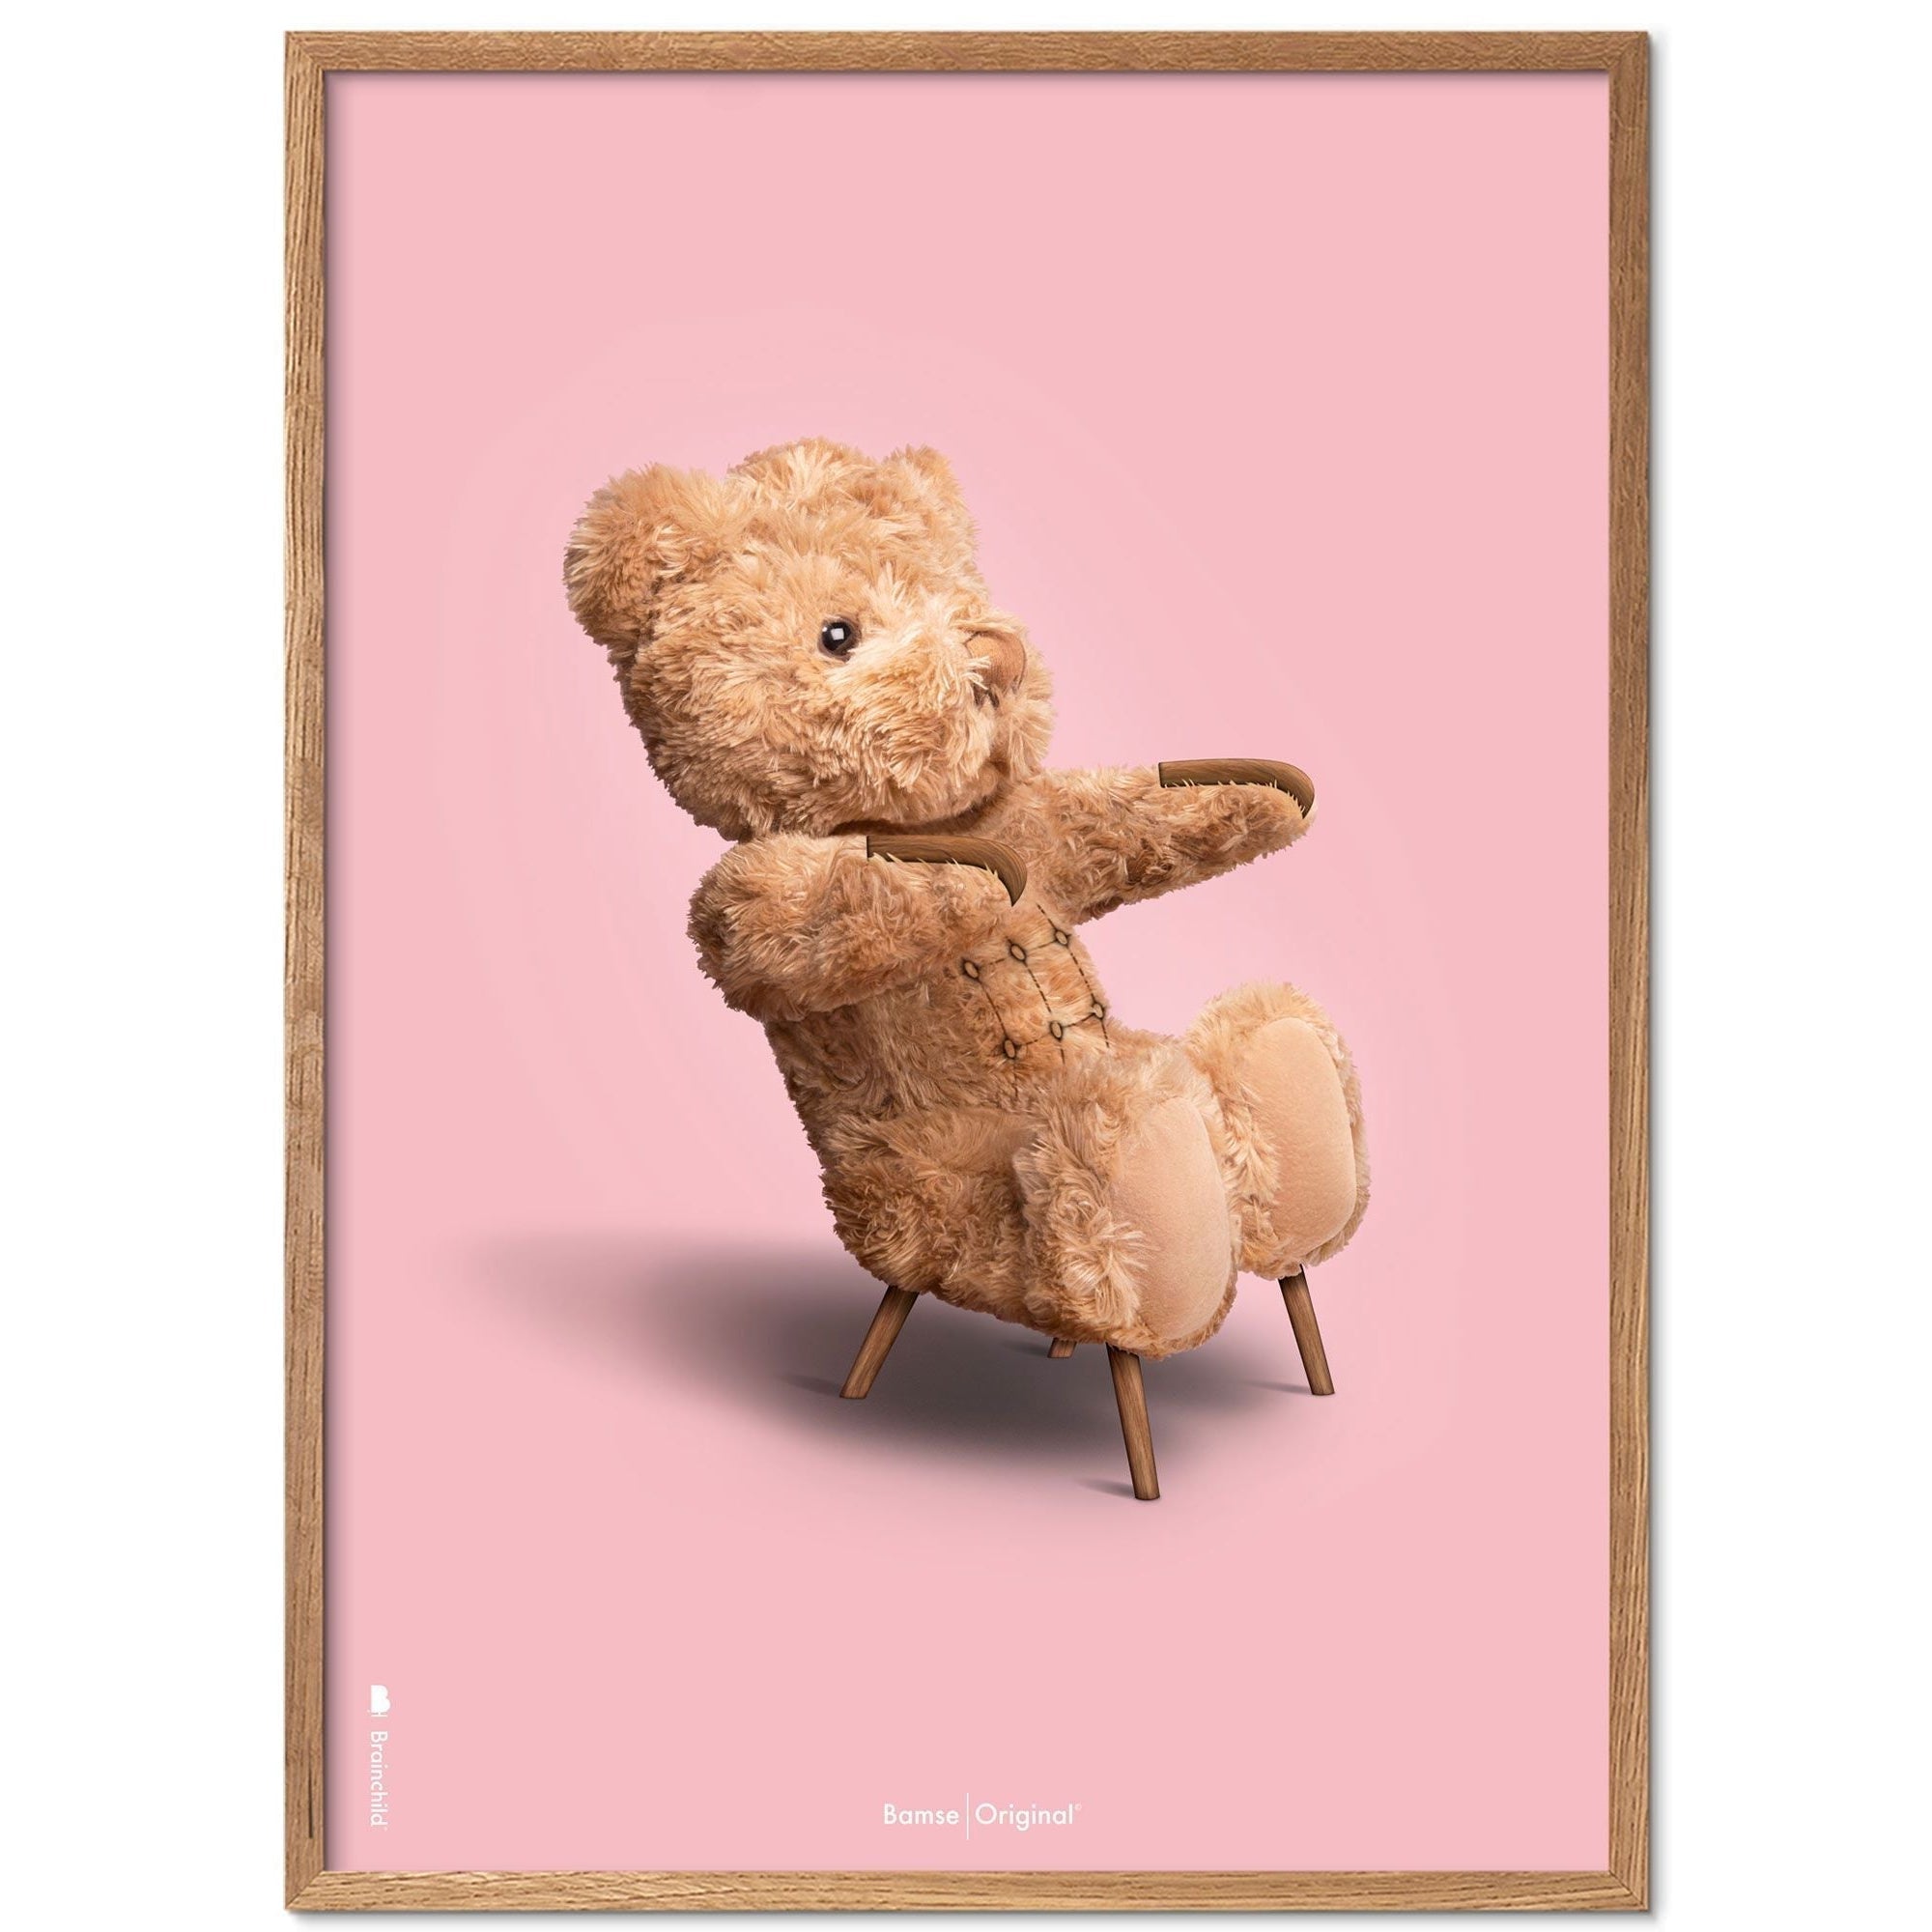 Brainchild Nallebjörn klassisk affischram i lätt träram 30x40 cm, rosa bakgrund